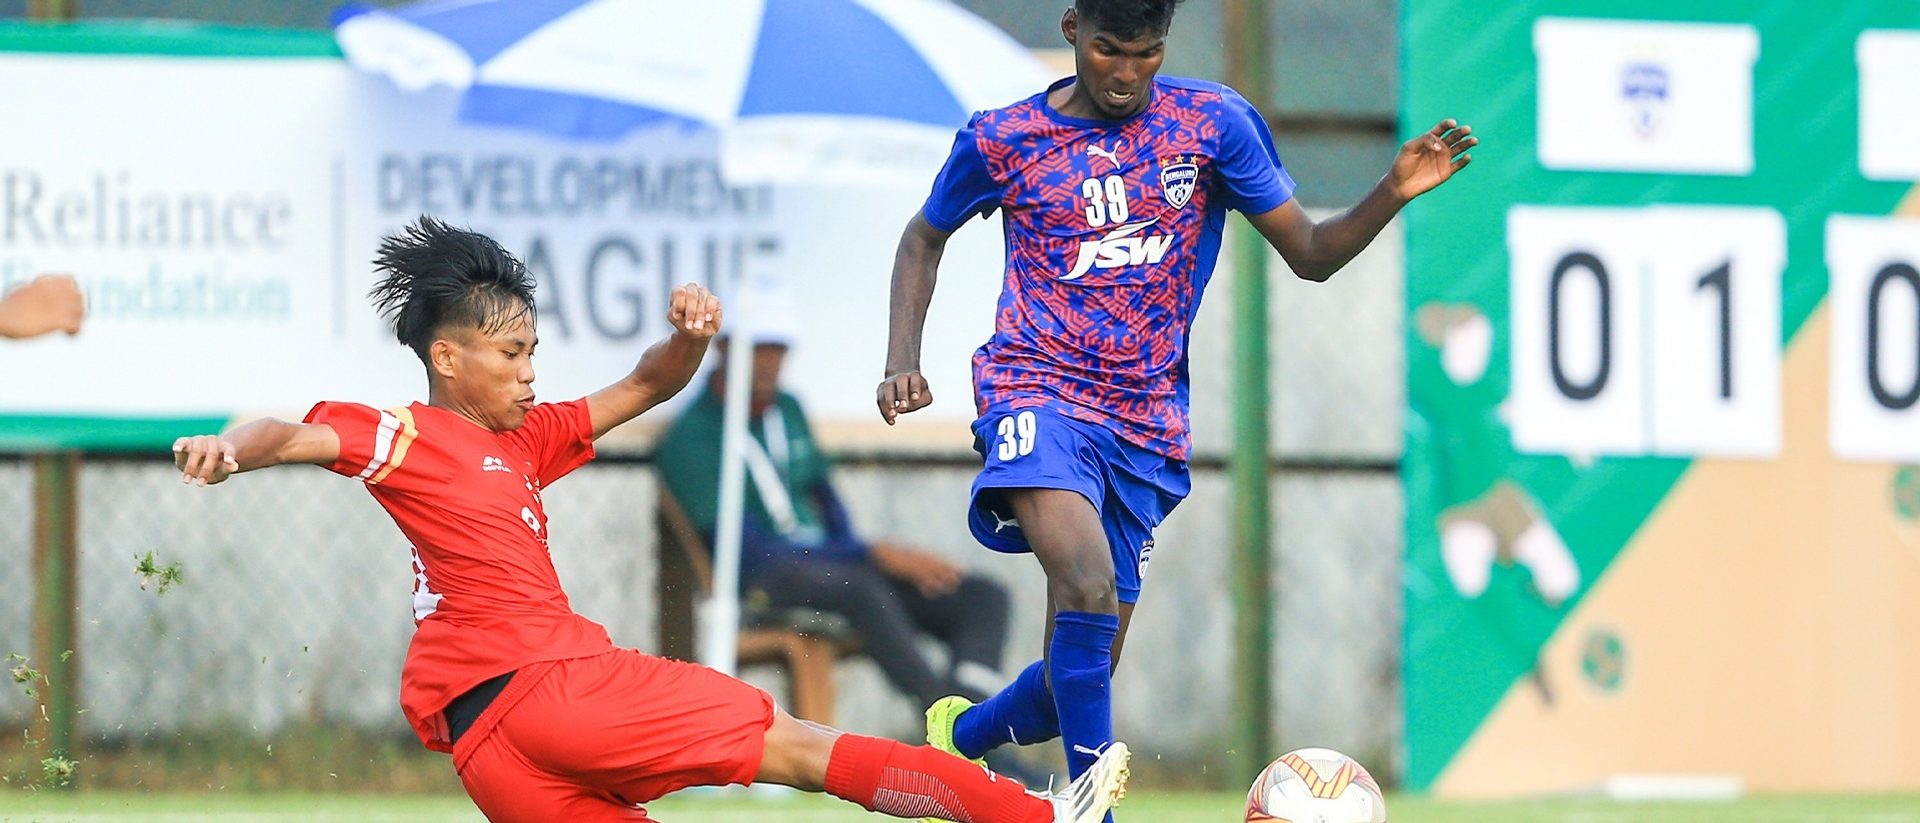 RF Development League Match 1: Bengaluru FC vs RF Young Champs